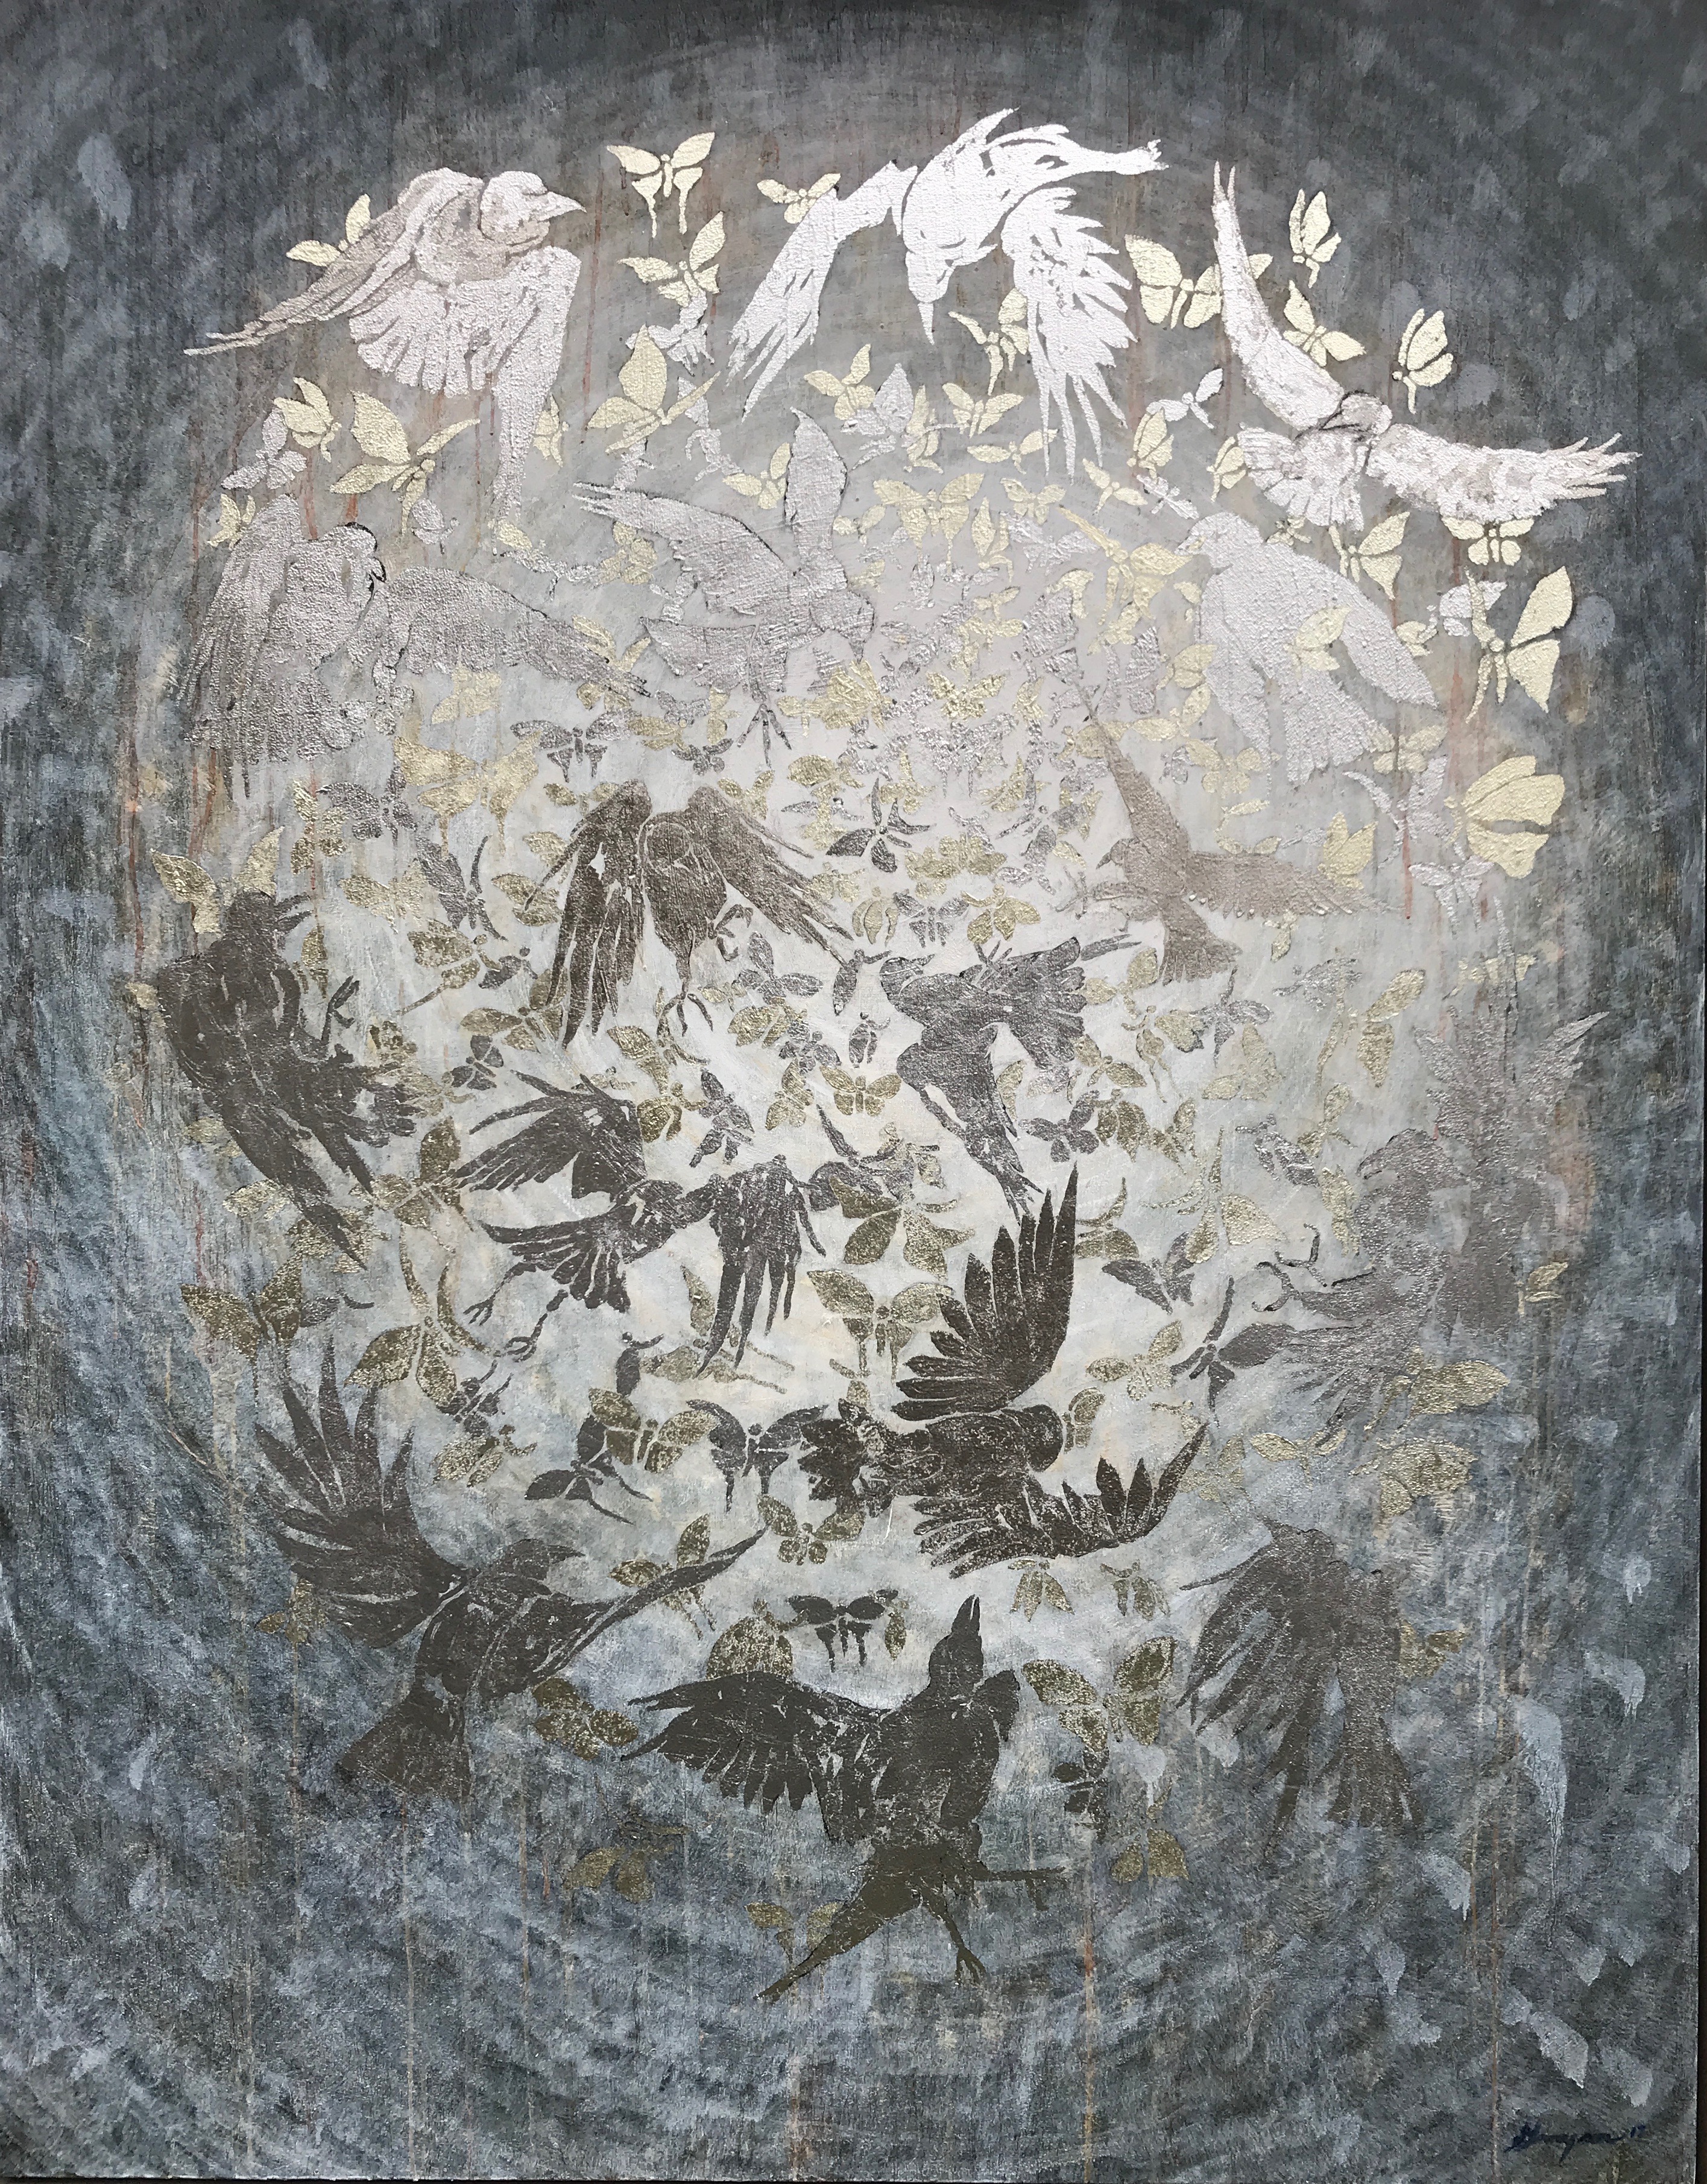 16 Birds (Industrial Melanism) 2017, Silver, palladium, white gold, oil on canvas. 72x56 in. <br> Collection of Pam Braden